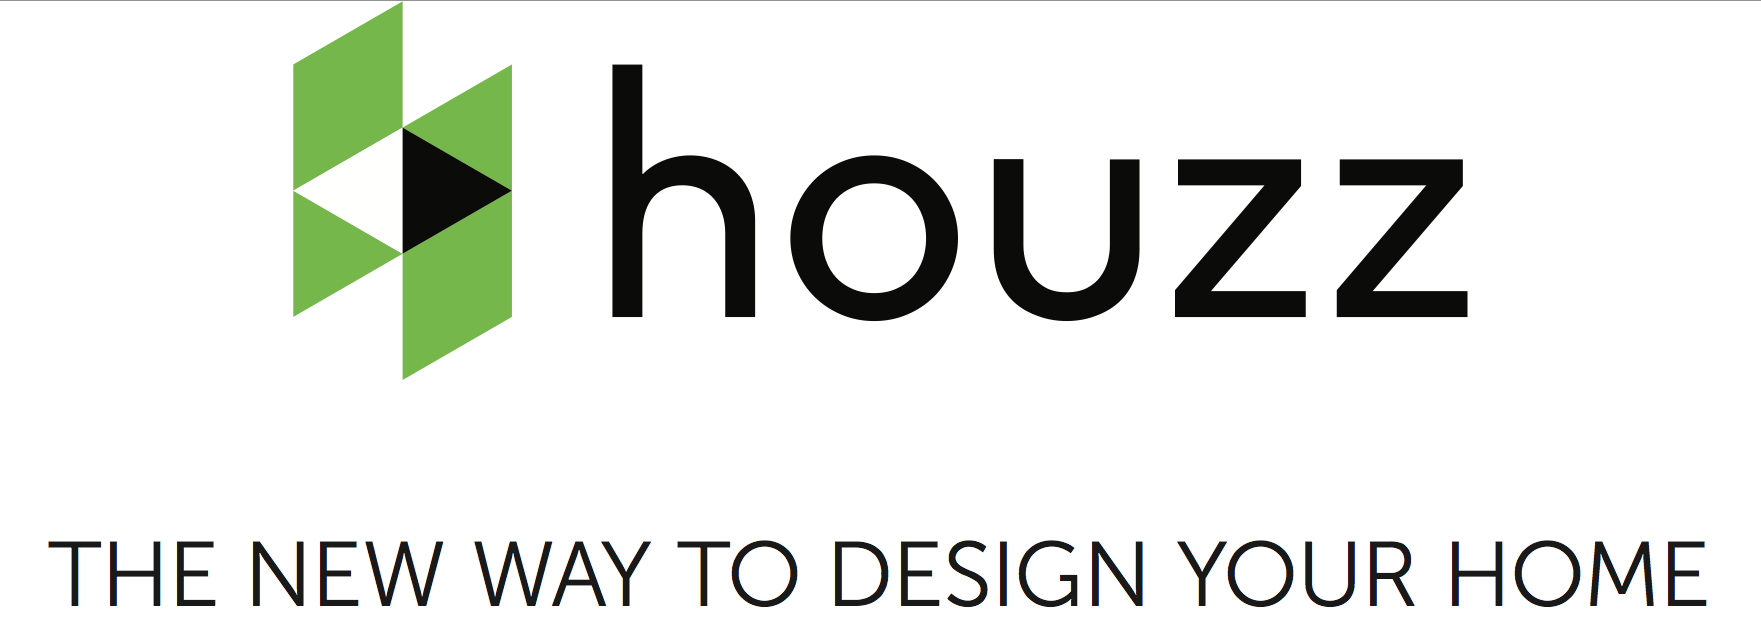 houzz products job